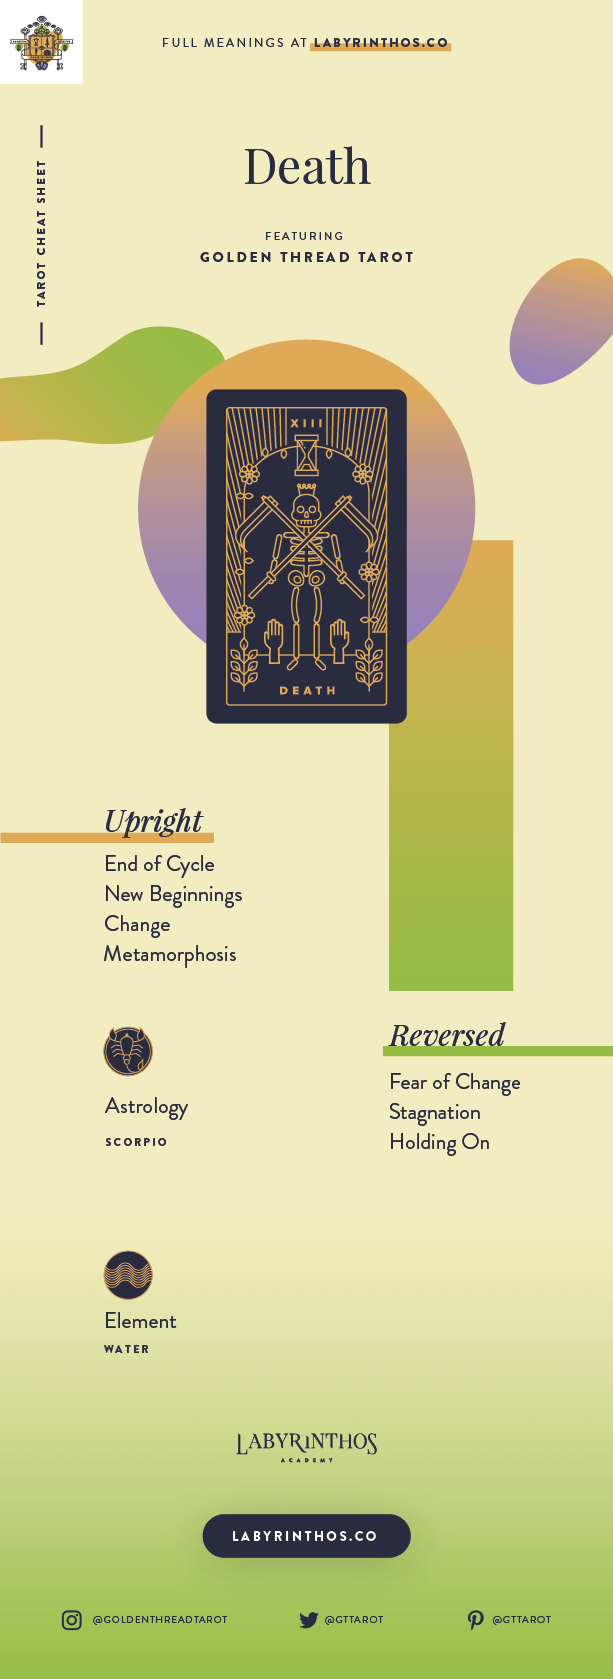 Meaning Major Arcana Tarot Card Meanings